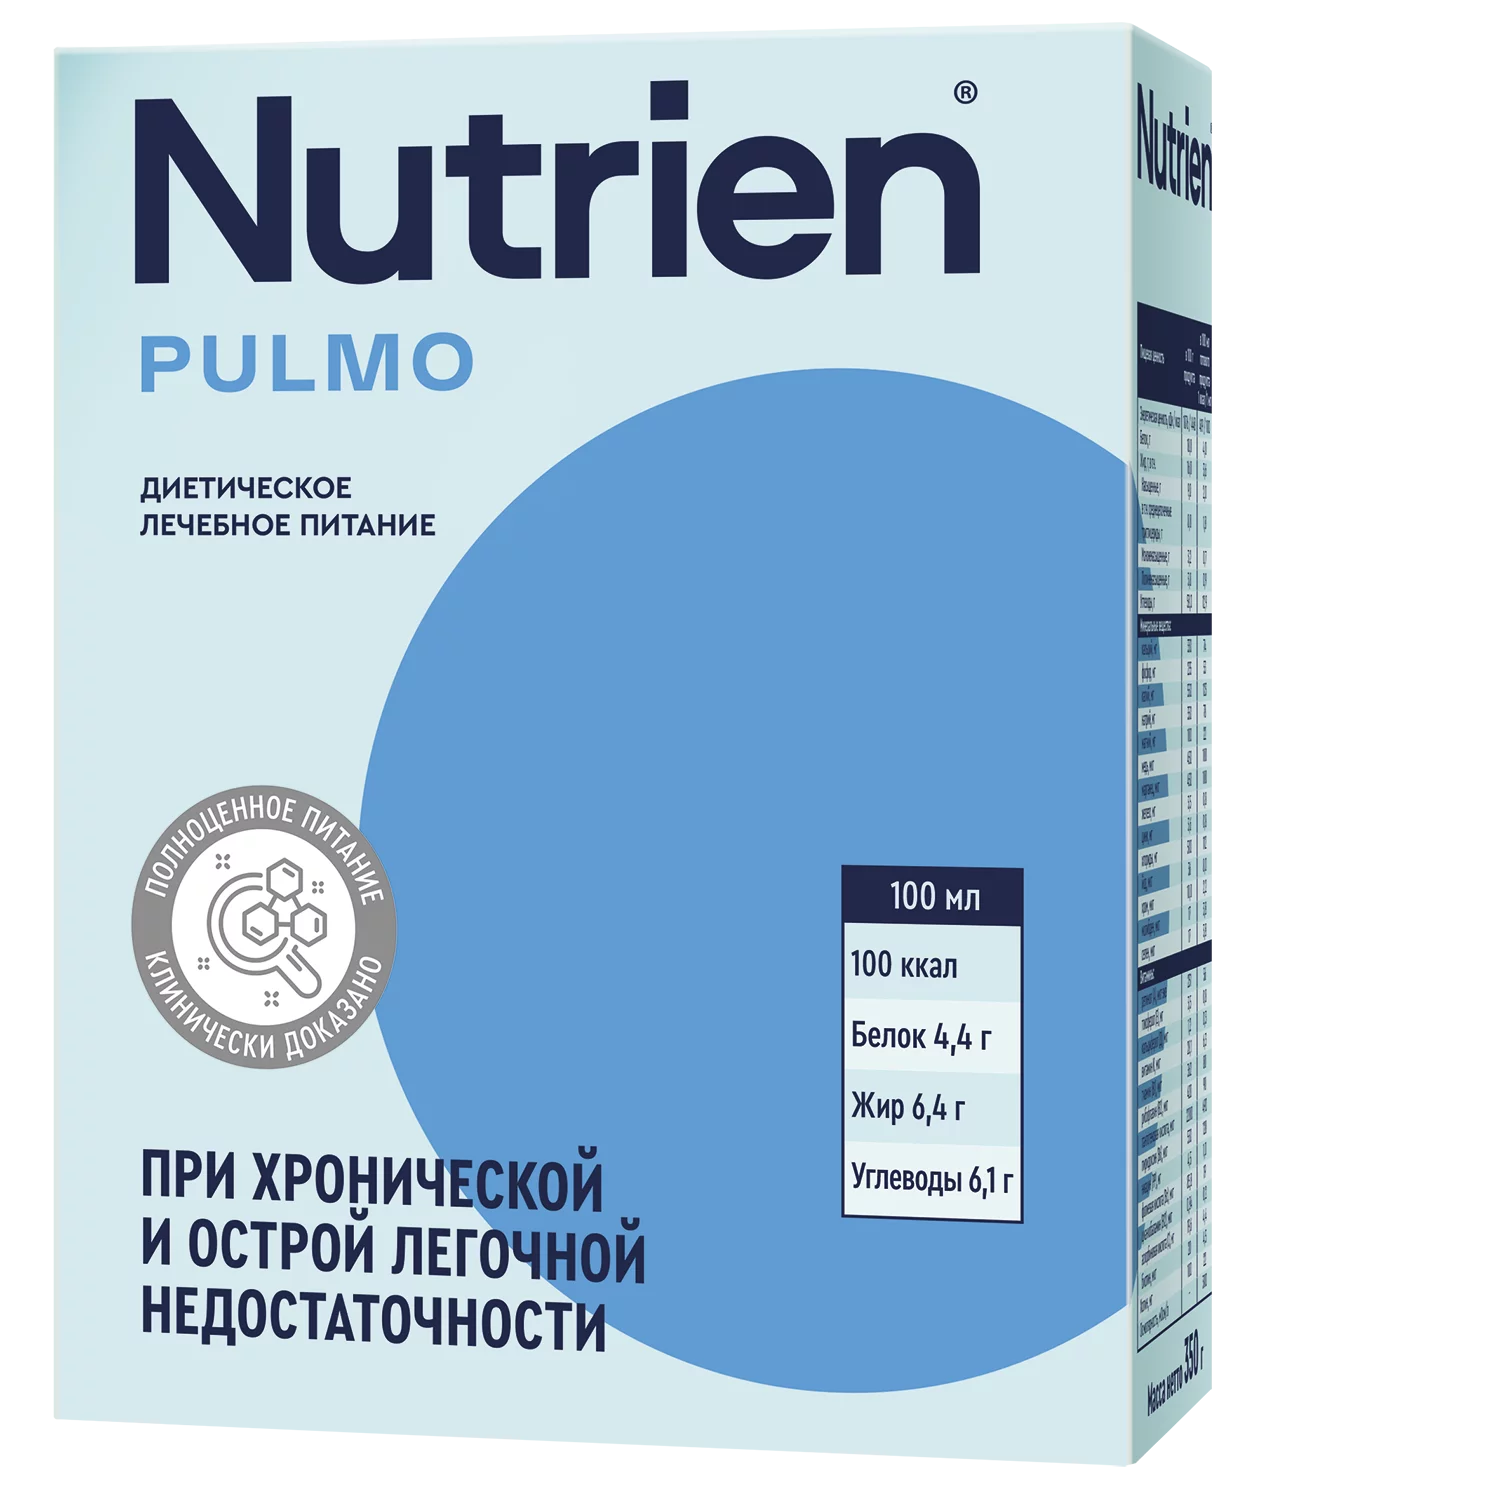 Nutrien Pulmo - 6